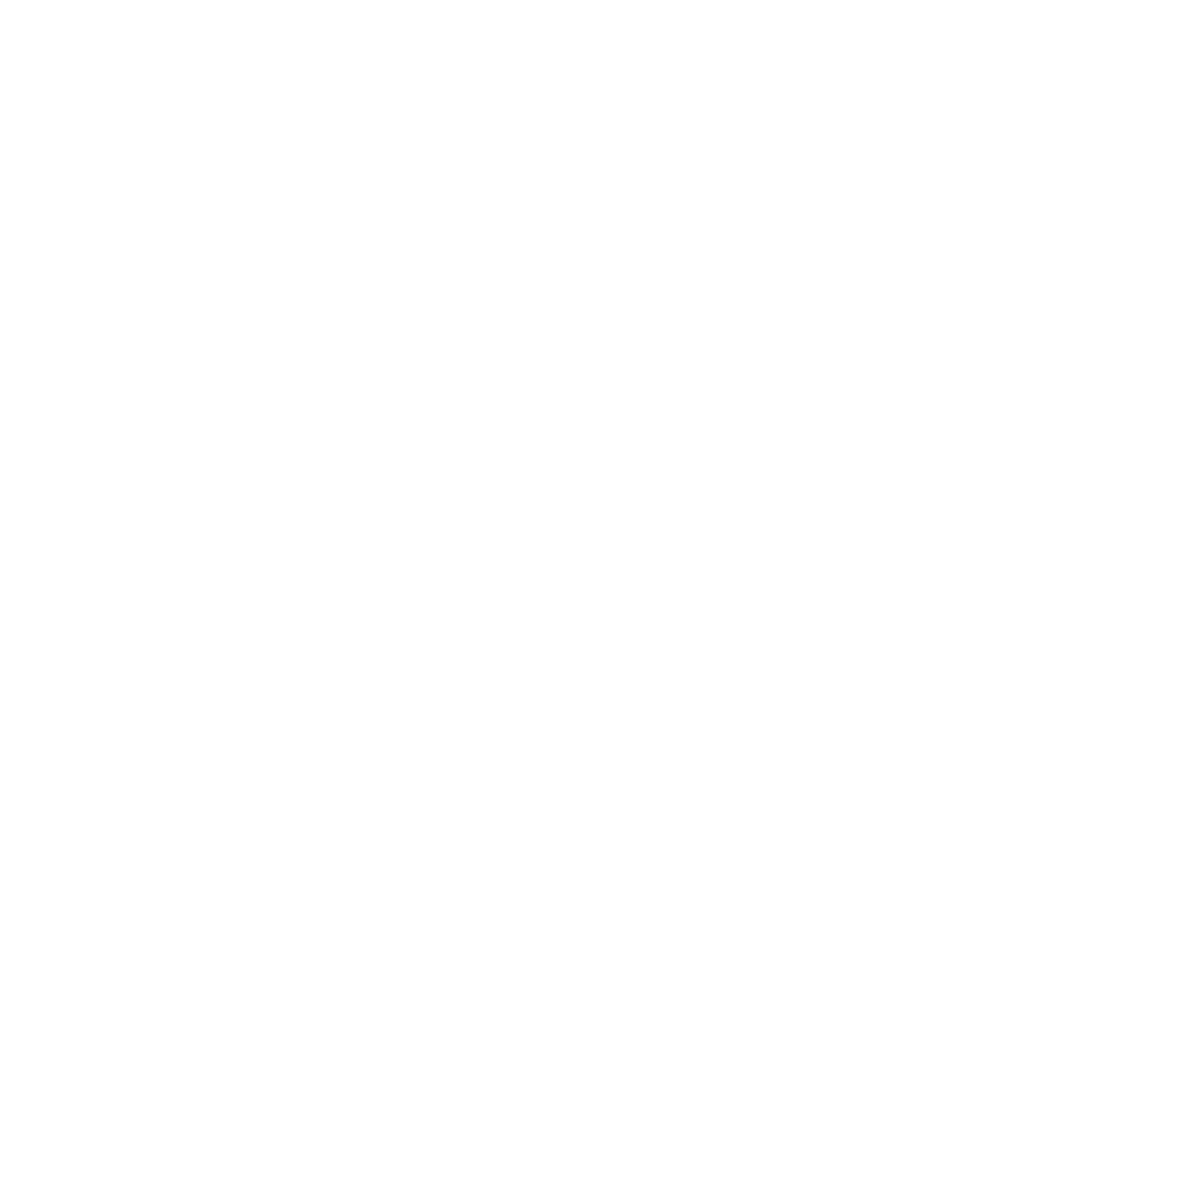 Optimized for streaming data